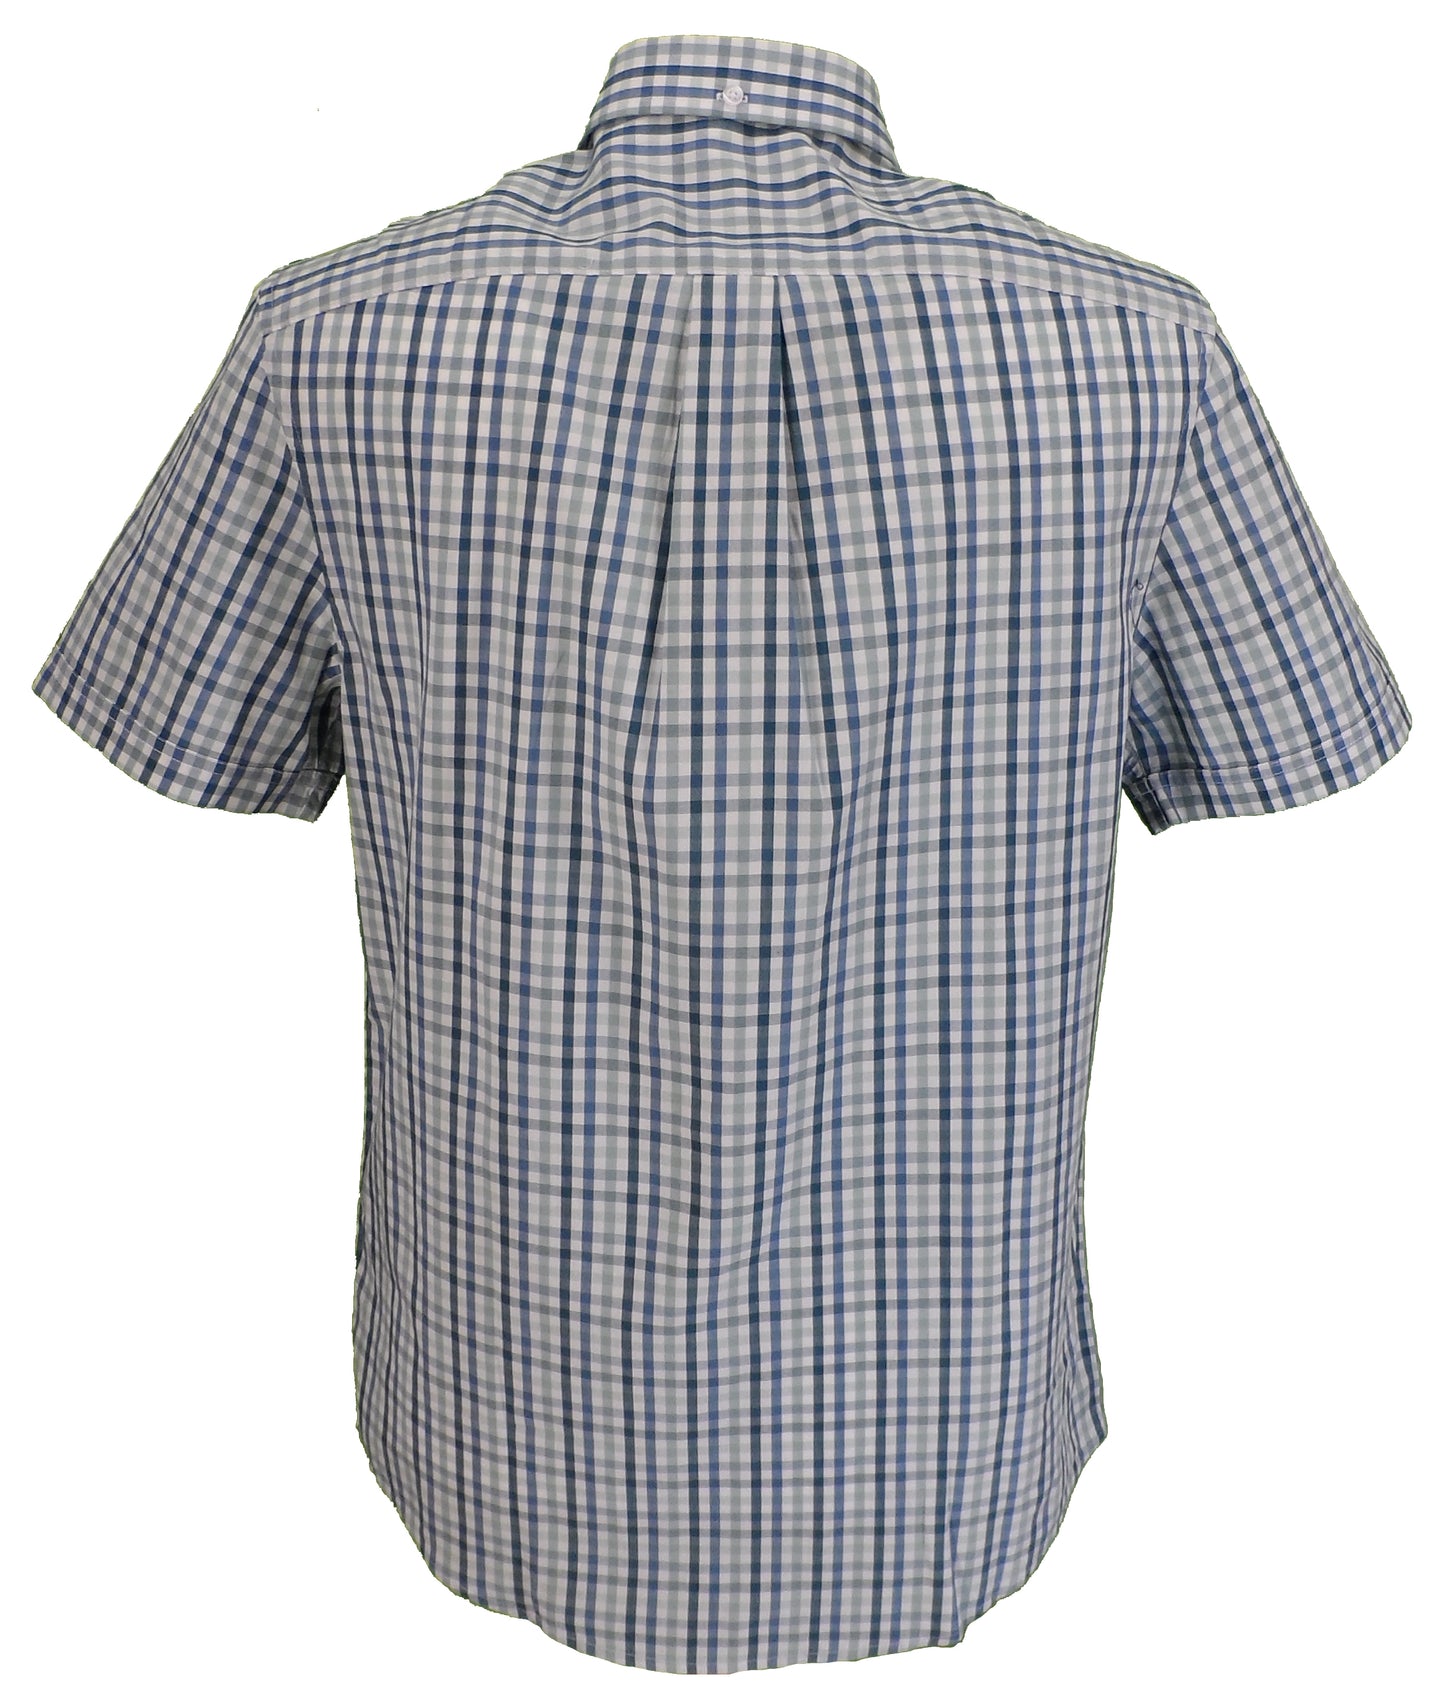 Farah Herren-Kurzarmhemd aus 100 % Baumwolle mit Surf-Gingham-Karomuster in Blau